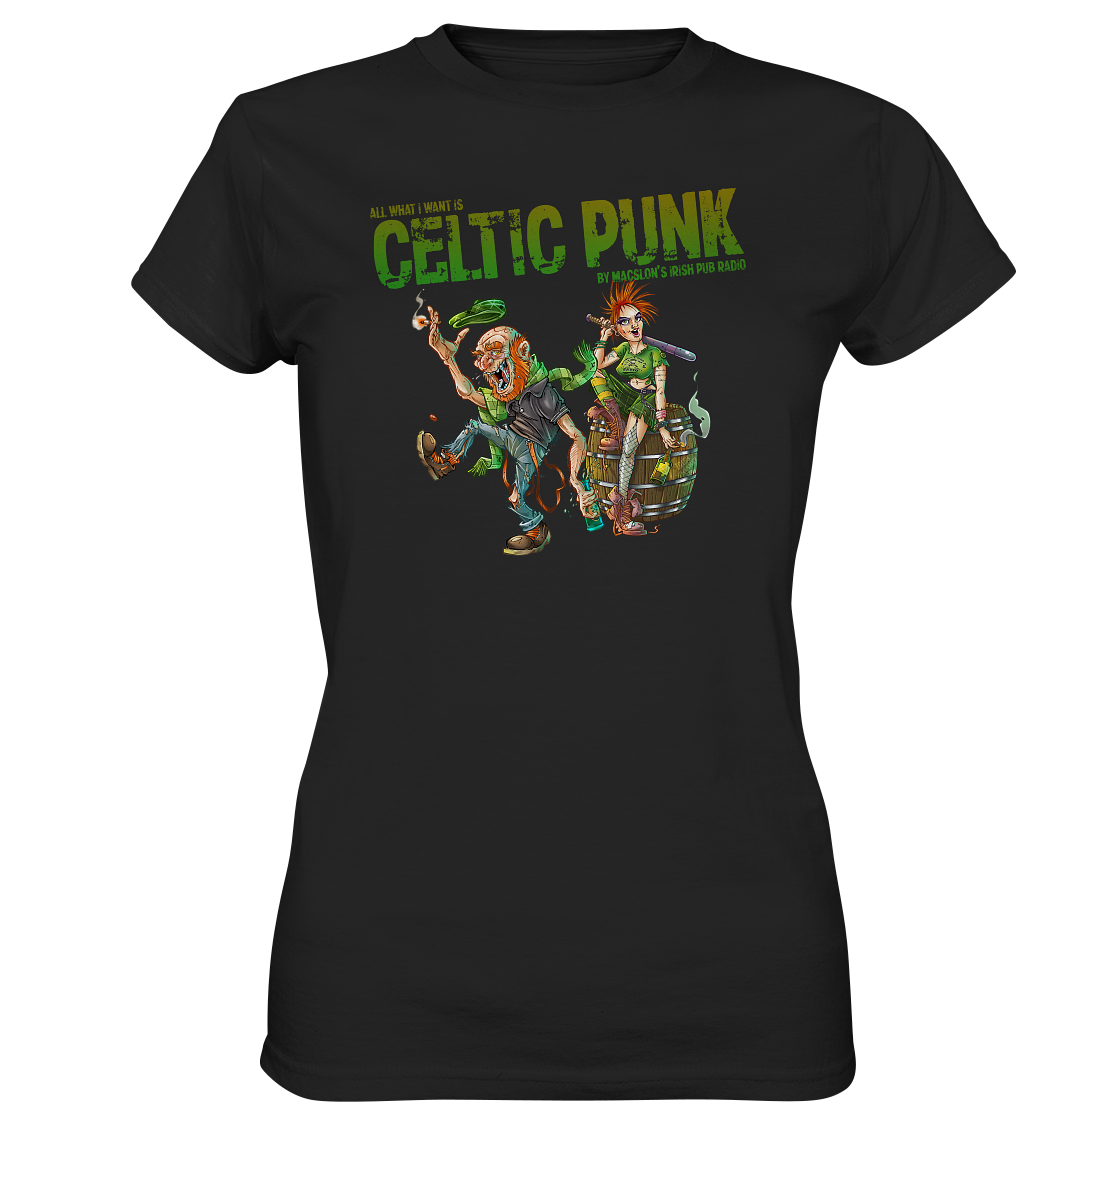 All What I Want Is "Celtic Punk" - Ladies Premium Shirt